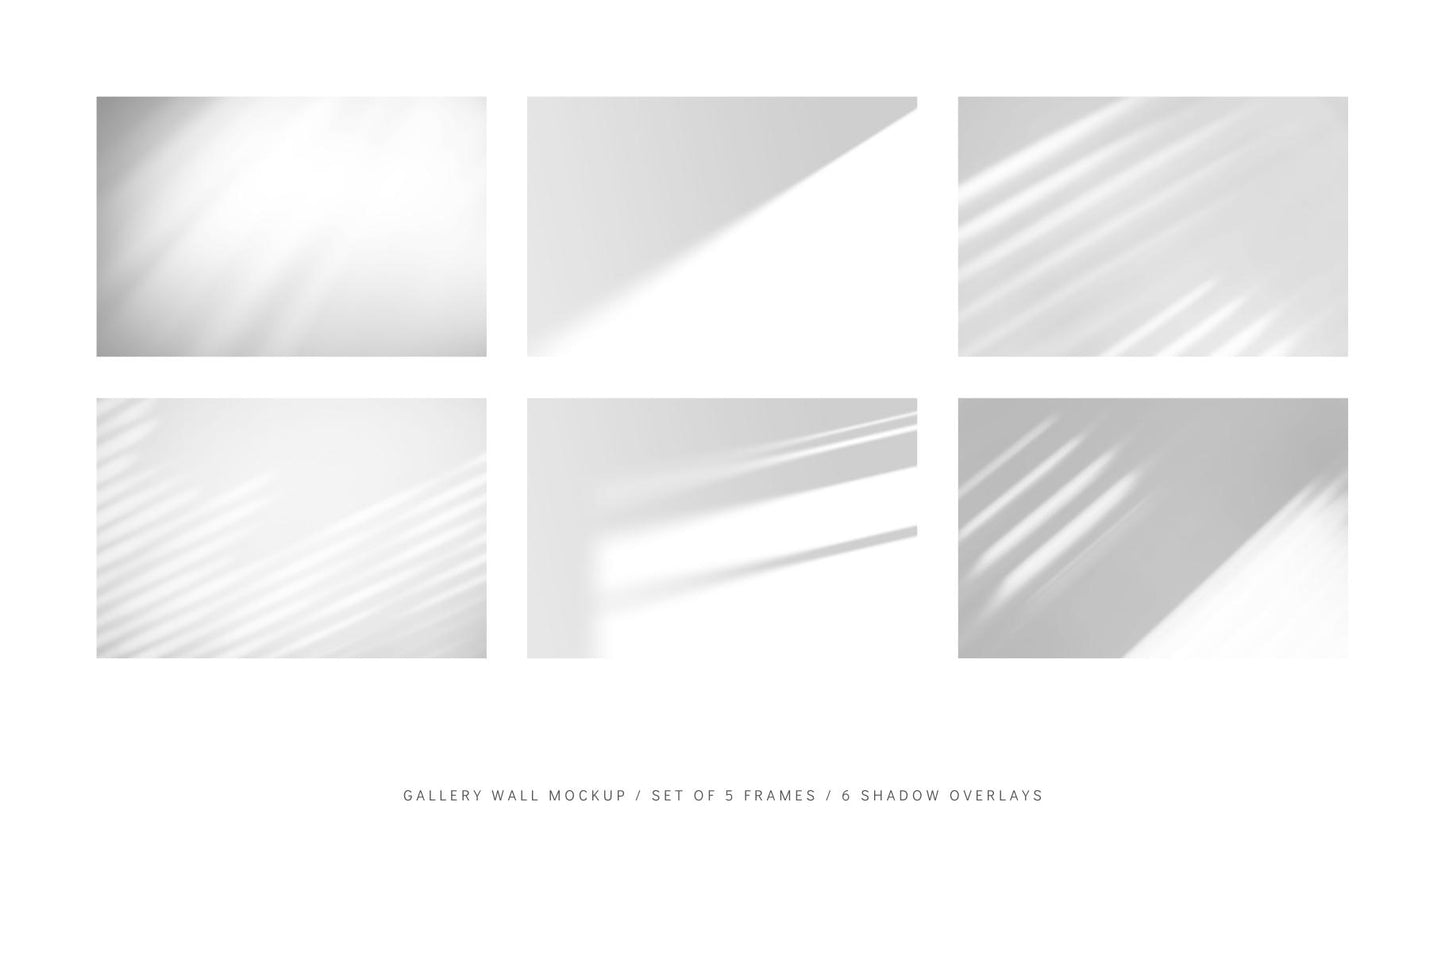 Gallery Wall Mockup | Set of 5 Frames | Frame Mockup | PSD | Shadow Overlays